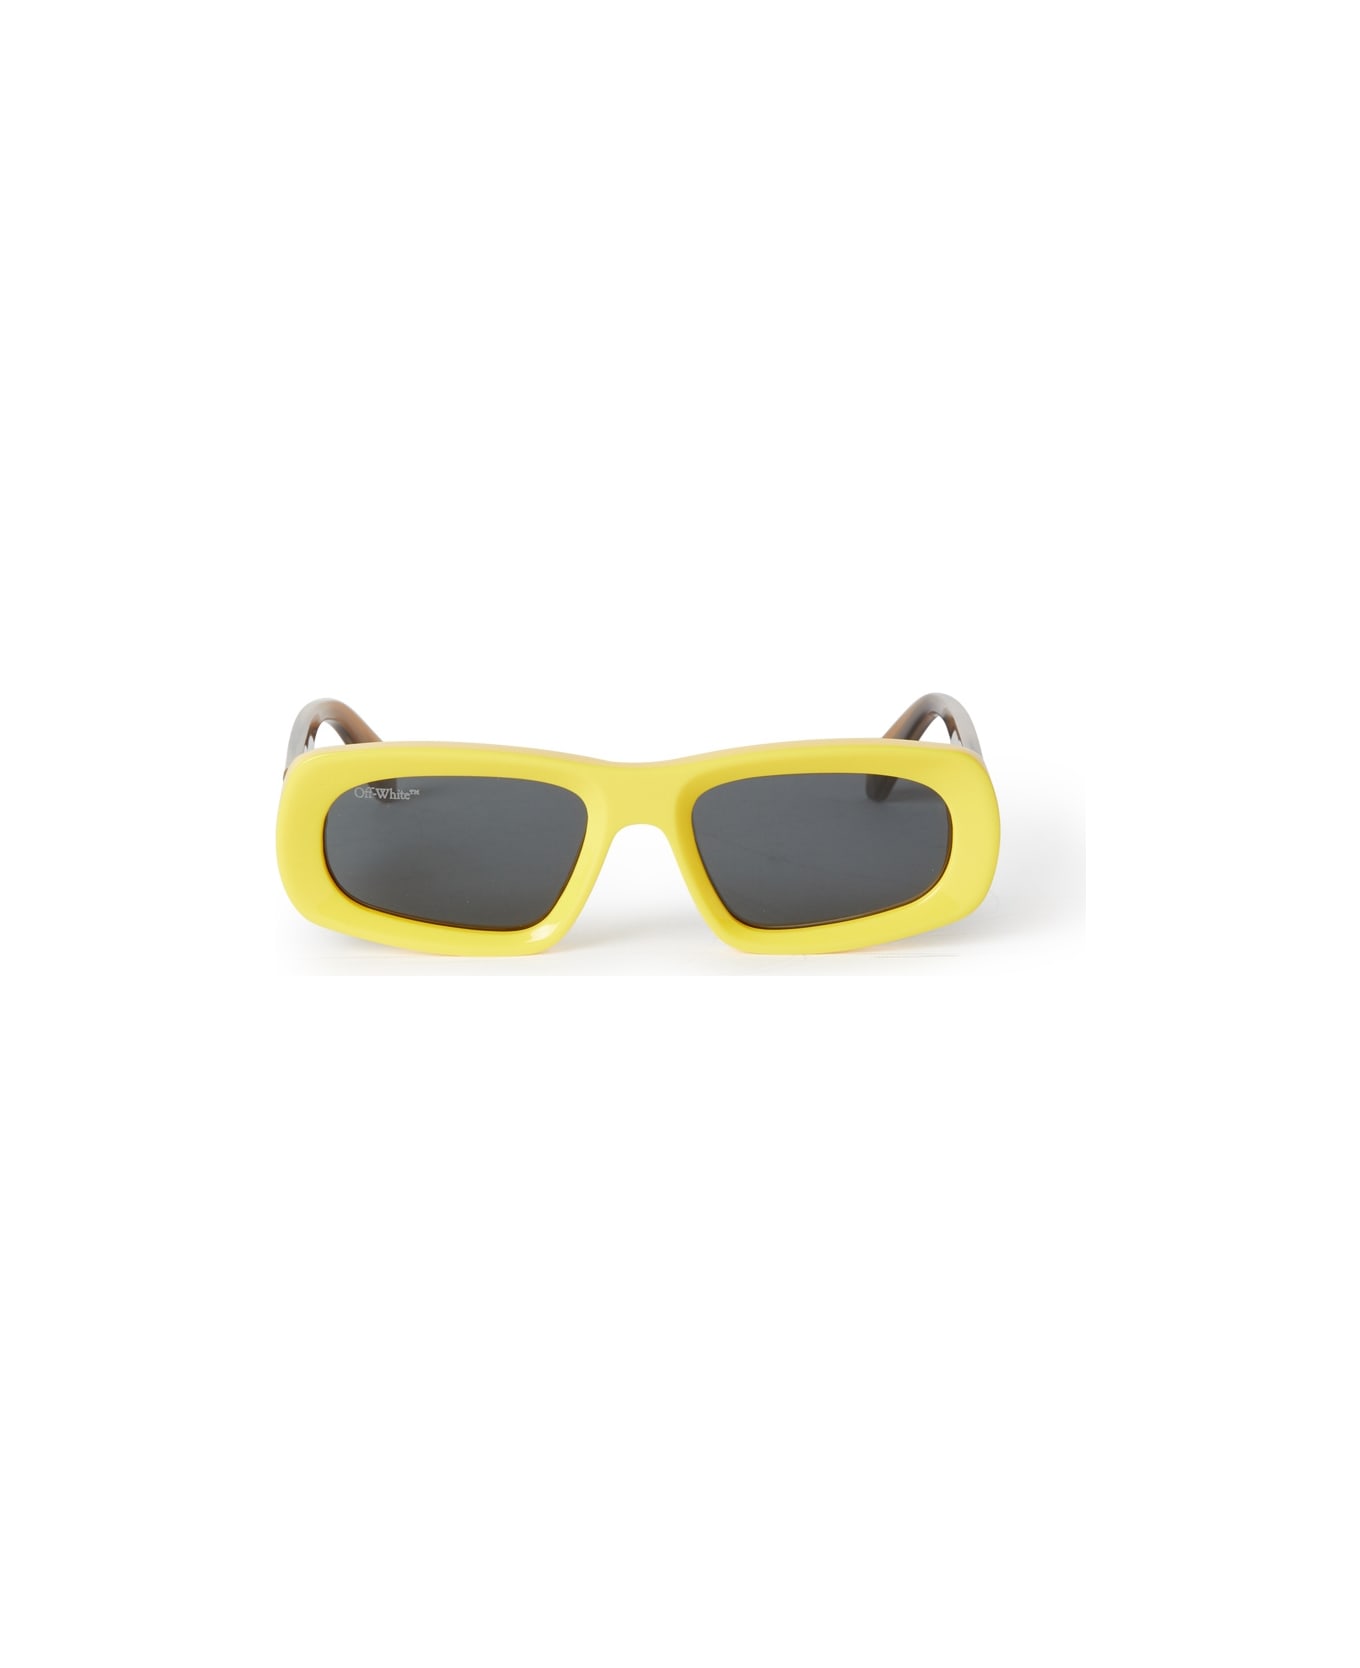 Off-White AUSTIN SUNGLASSES Sunglasses - Yellow